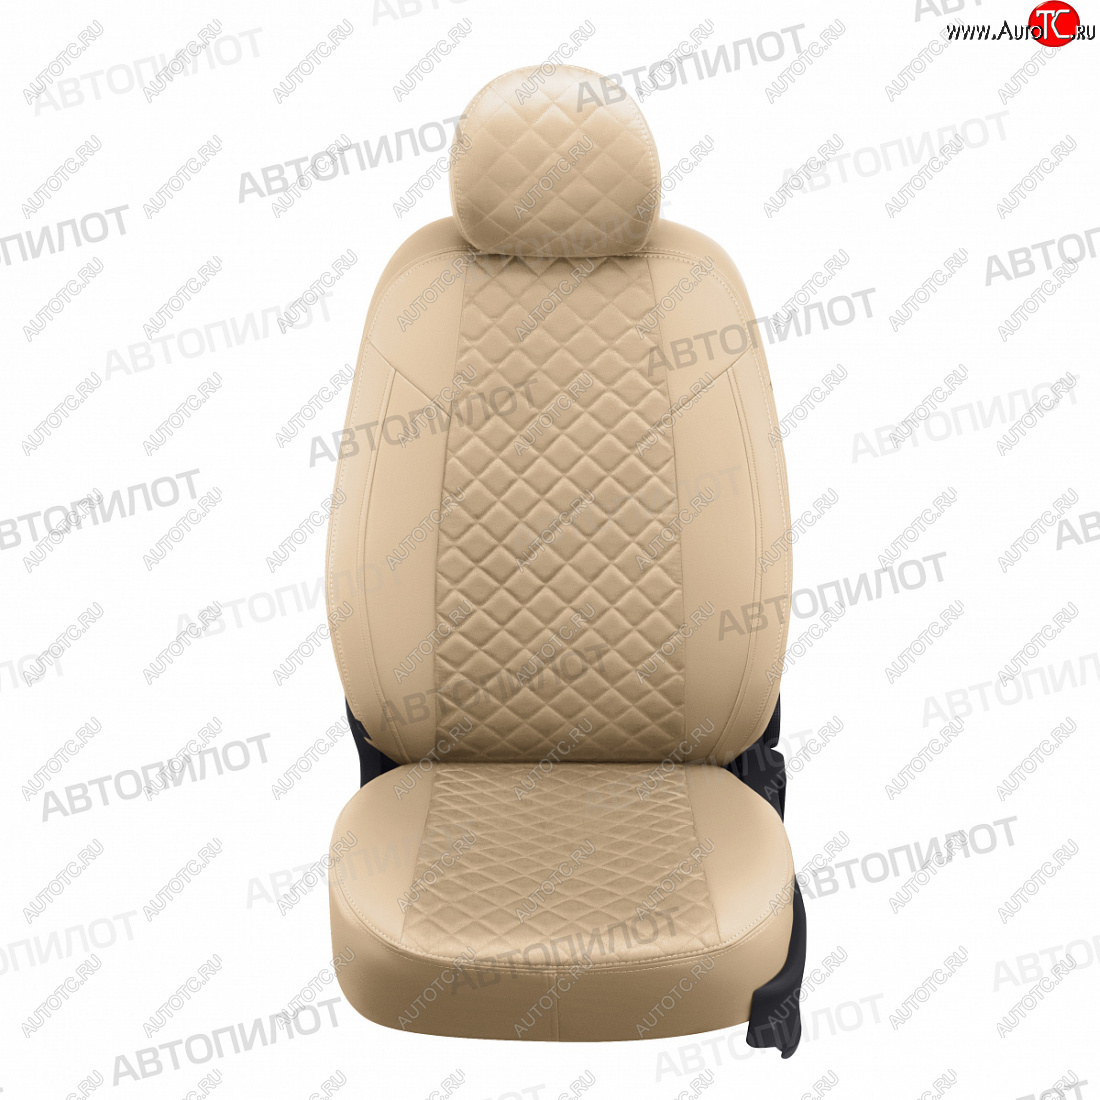 21 599 р. Чехлы сидений (экокожа/алькантара, 9 мест) Автопилот Ромб  Hyundai Starex/H1  A1 (1997-2007) (бежевый)